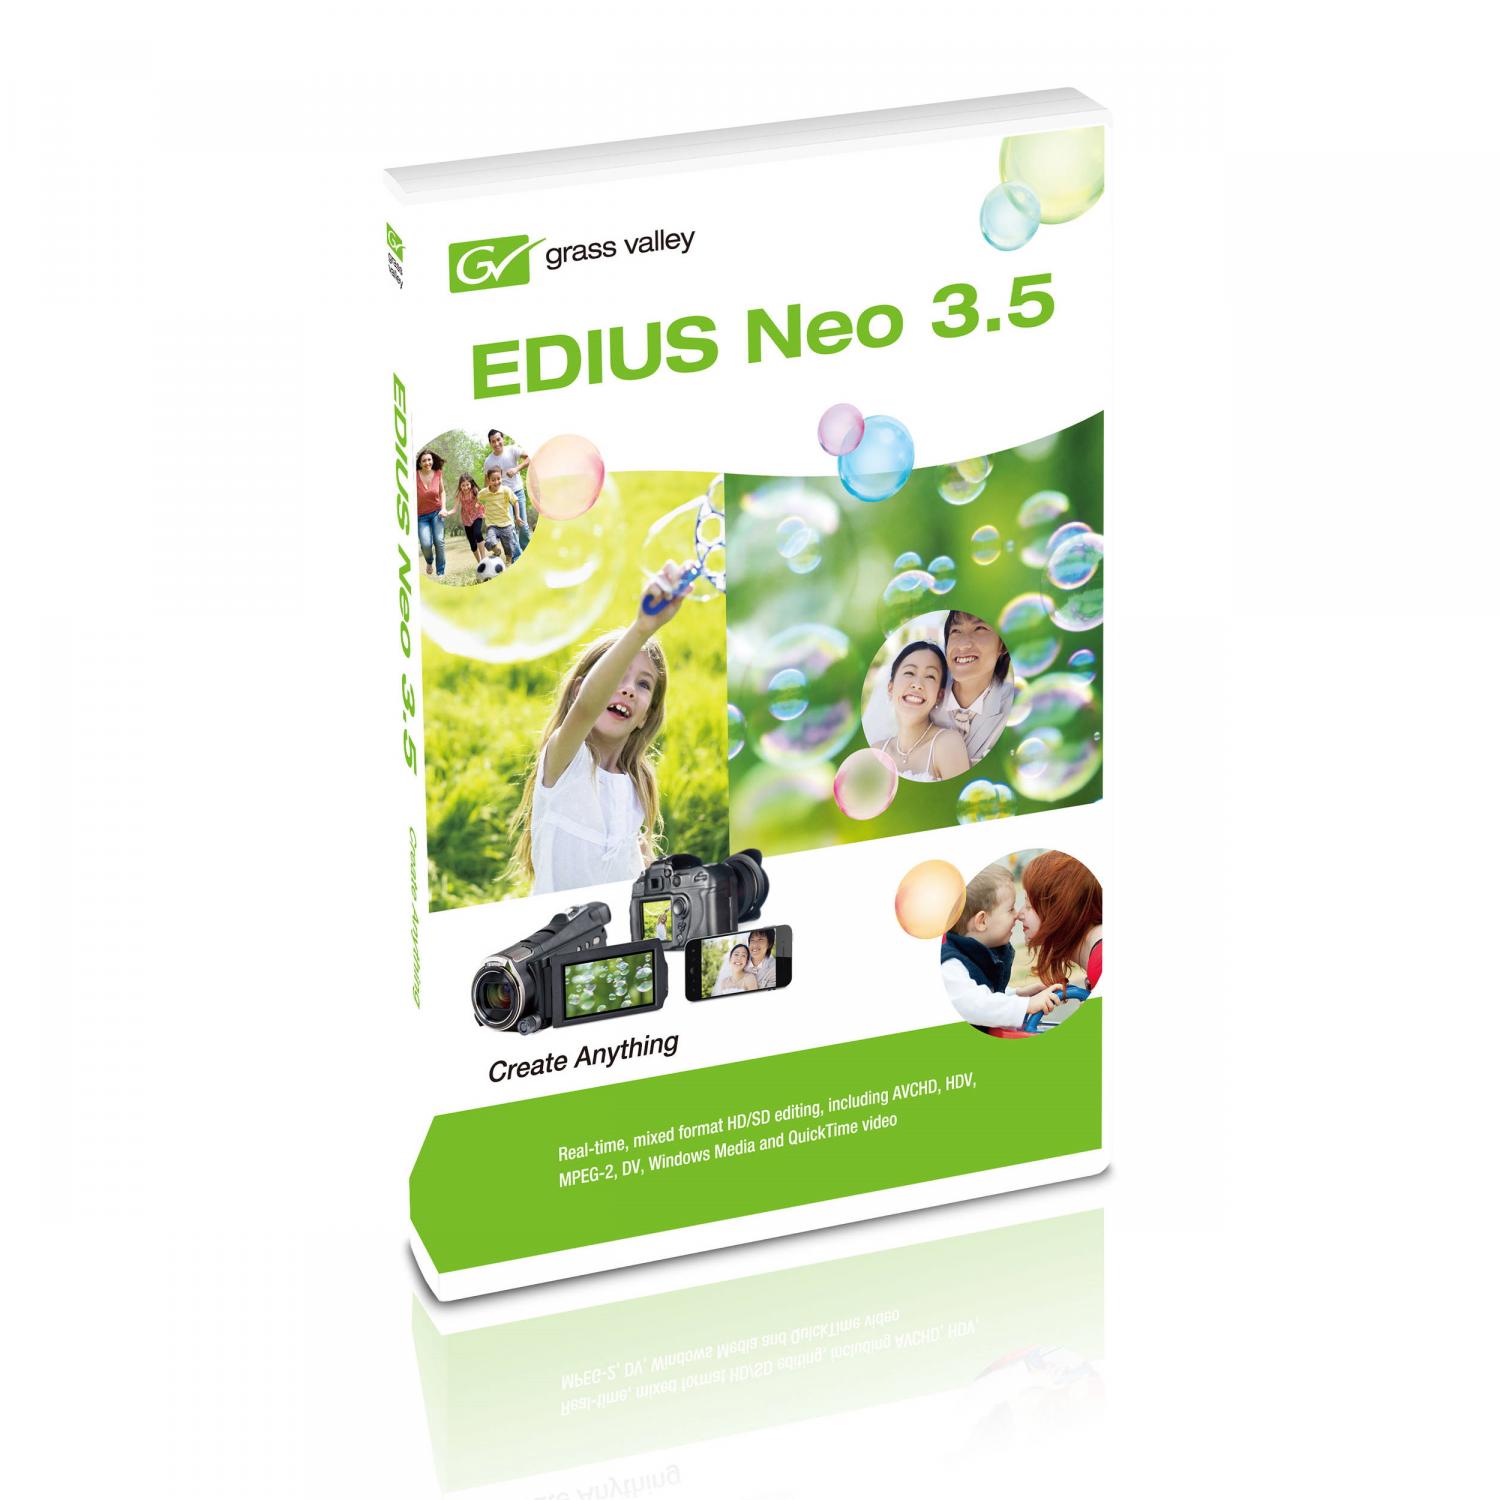 EDIUS NEO 3.5